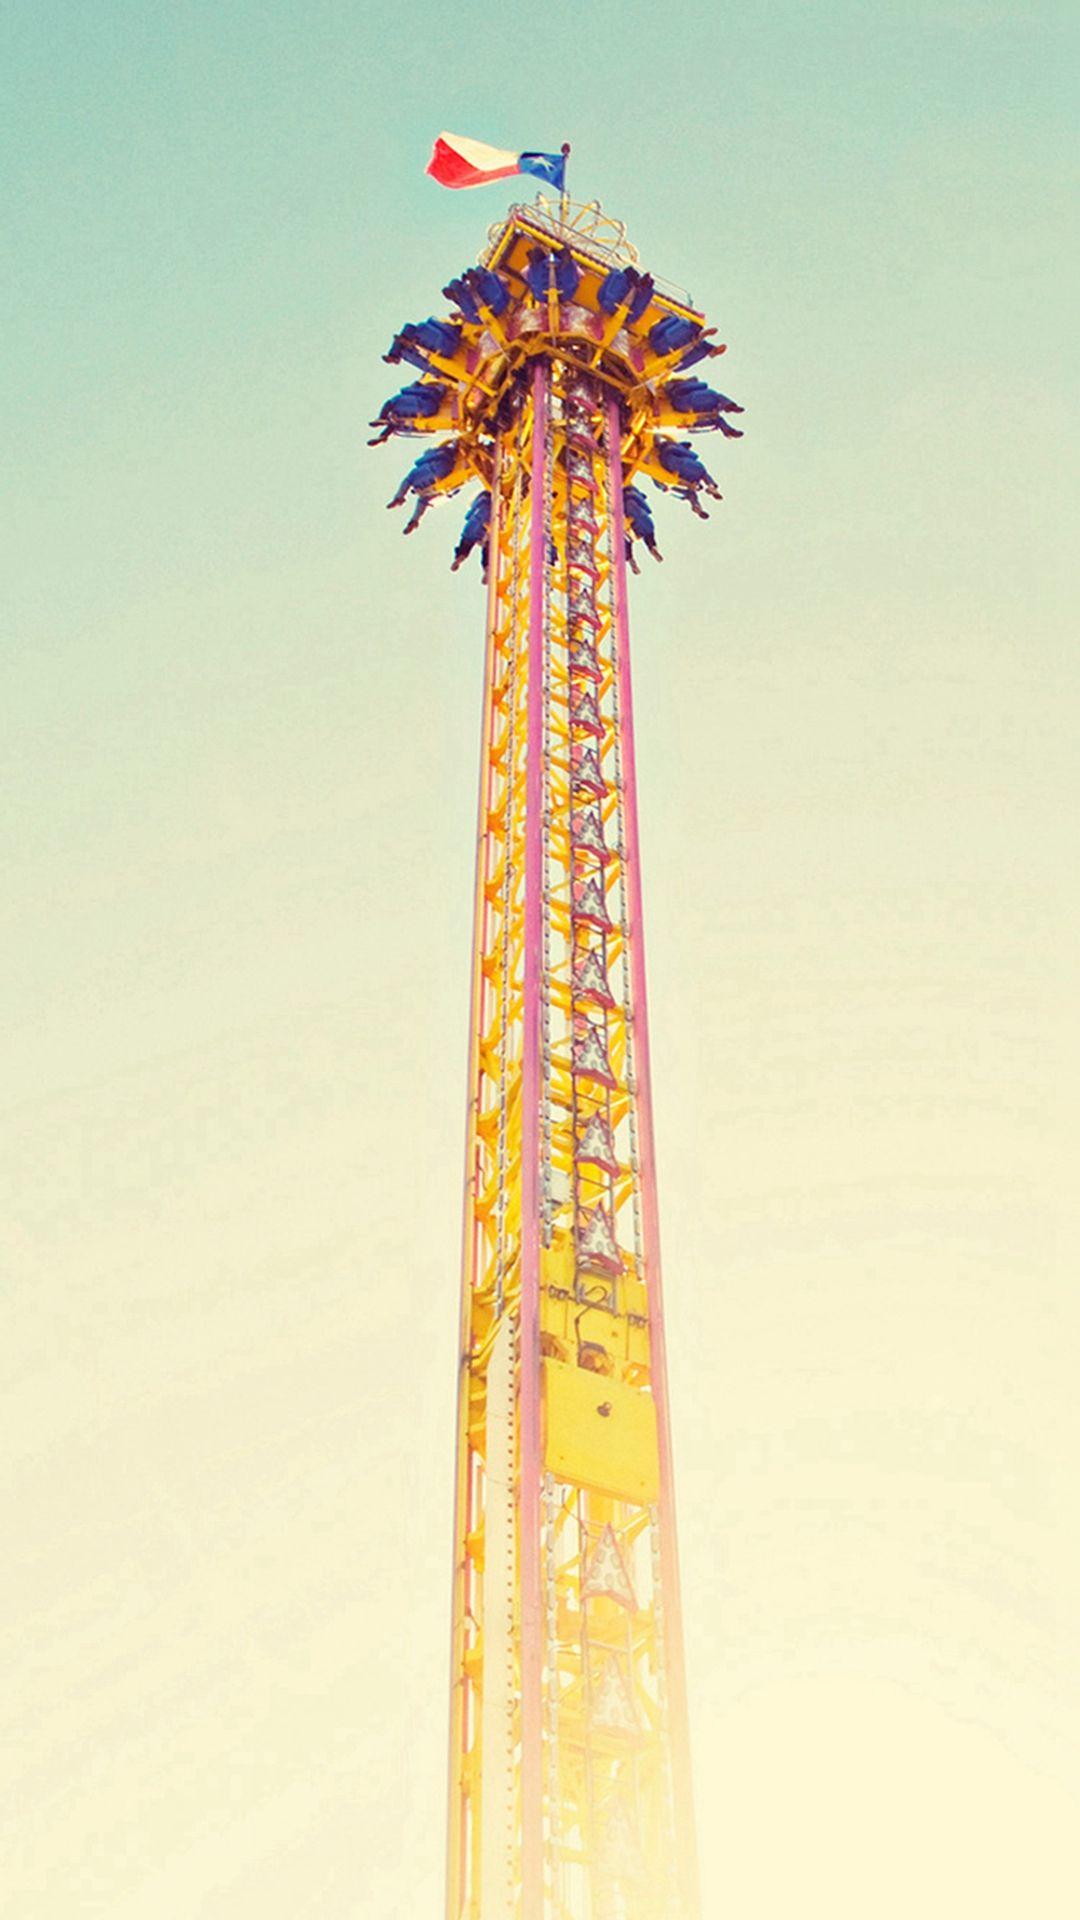 Amusement Park Tower iPhone 8 Wallpaper Download. iPhone